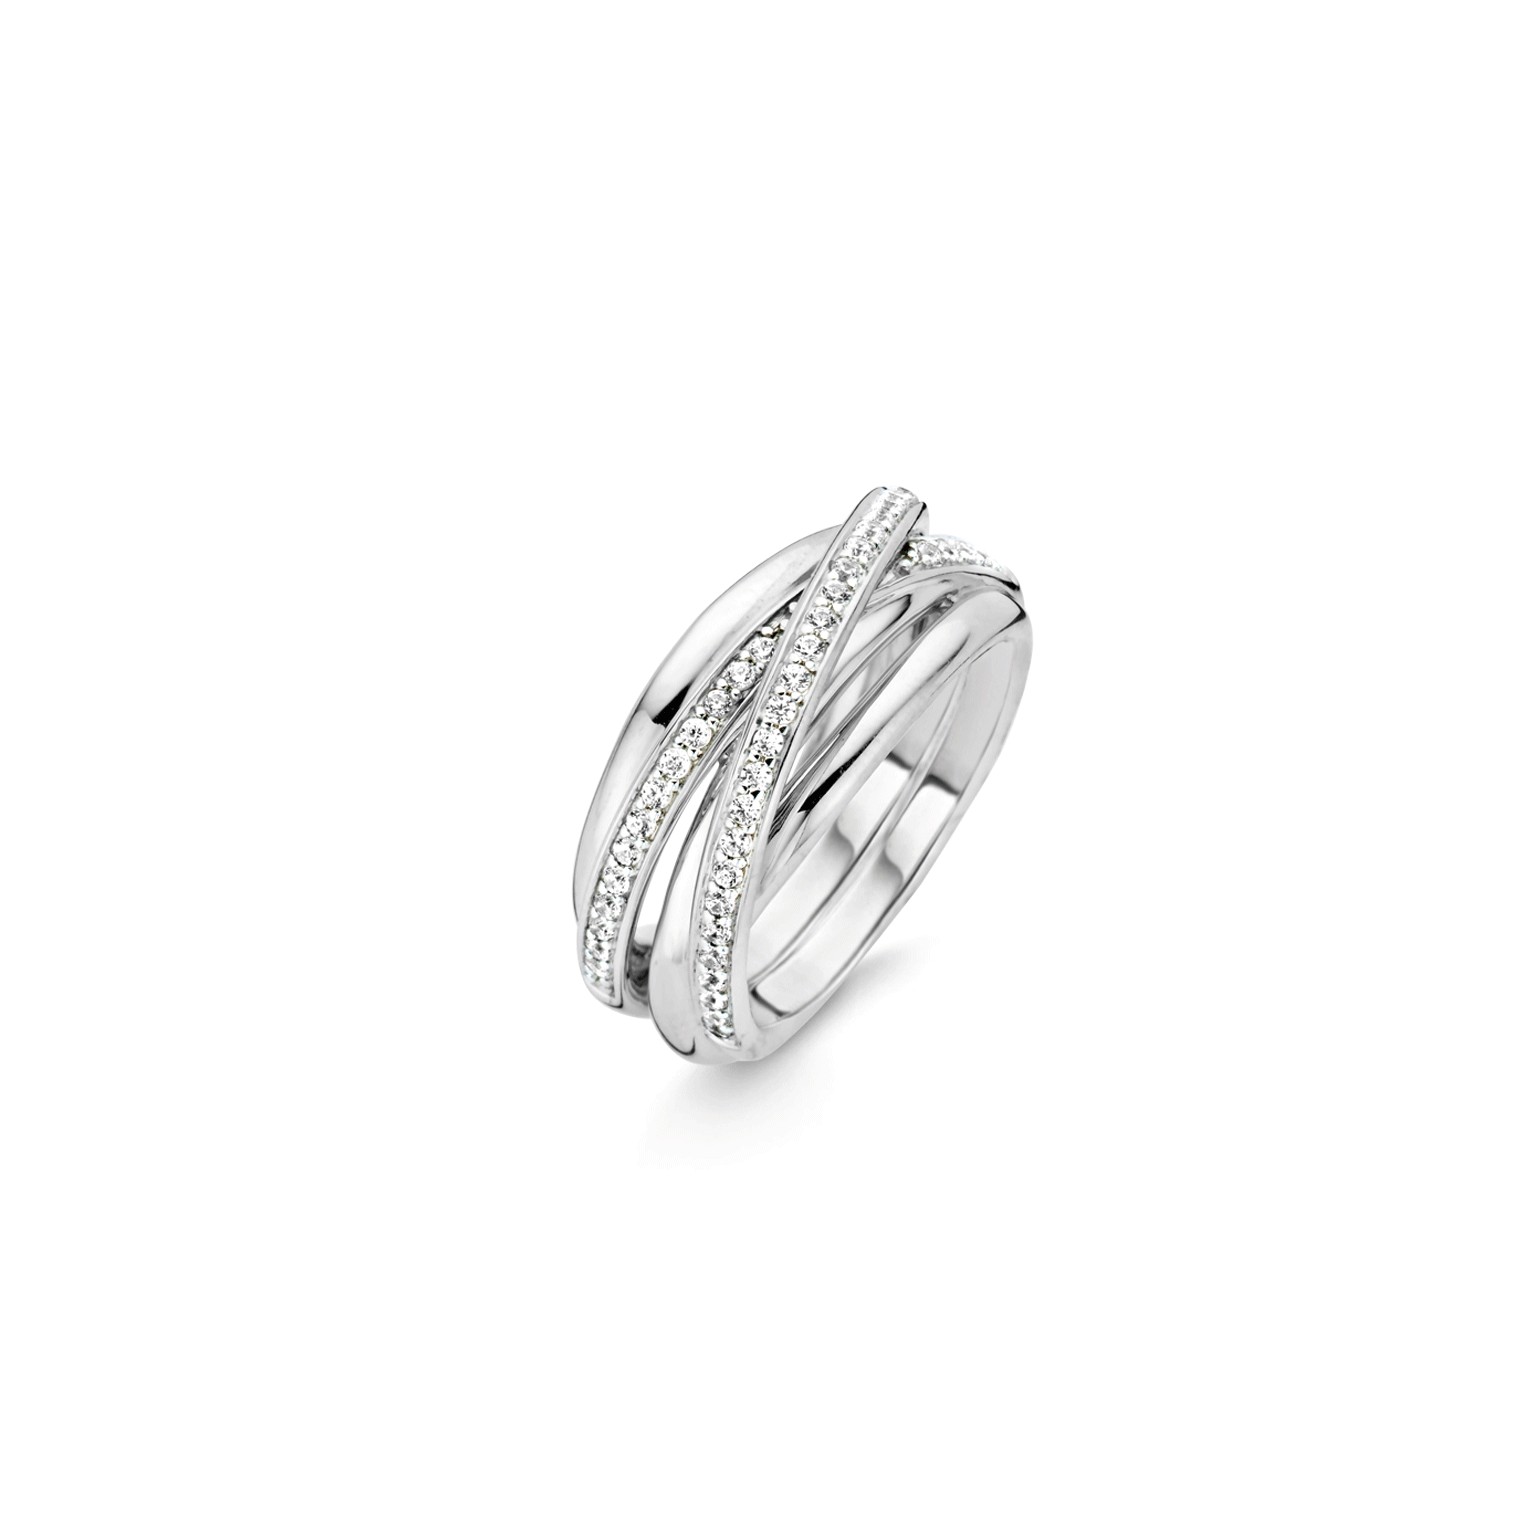 TI SENTO - Milano Ring 12056ZI Gala Jewelers Inc. White Oak, PA